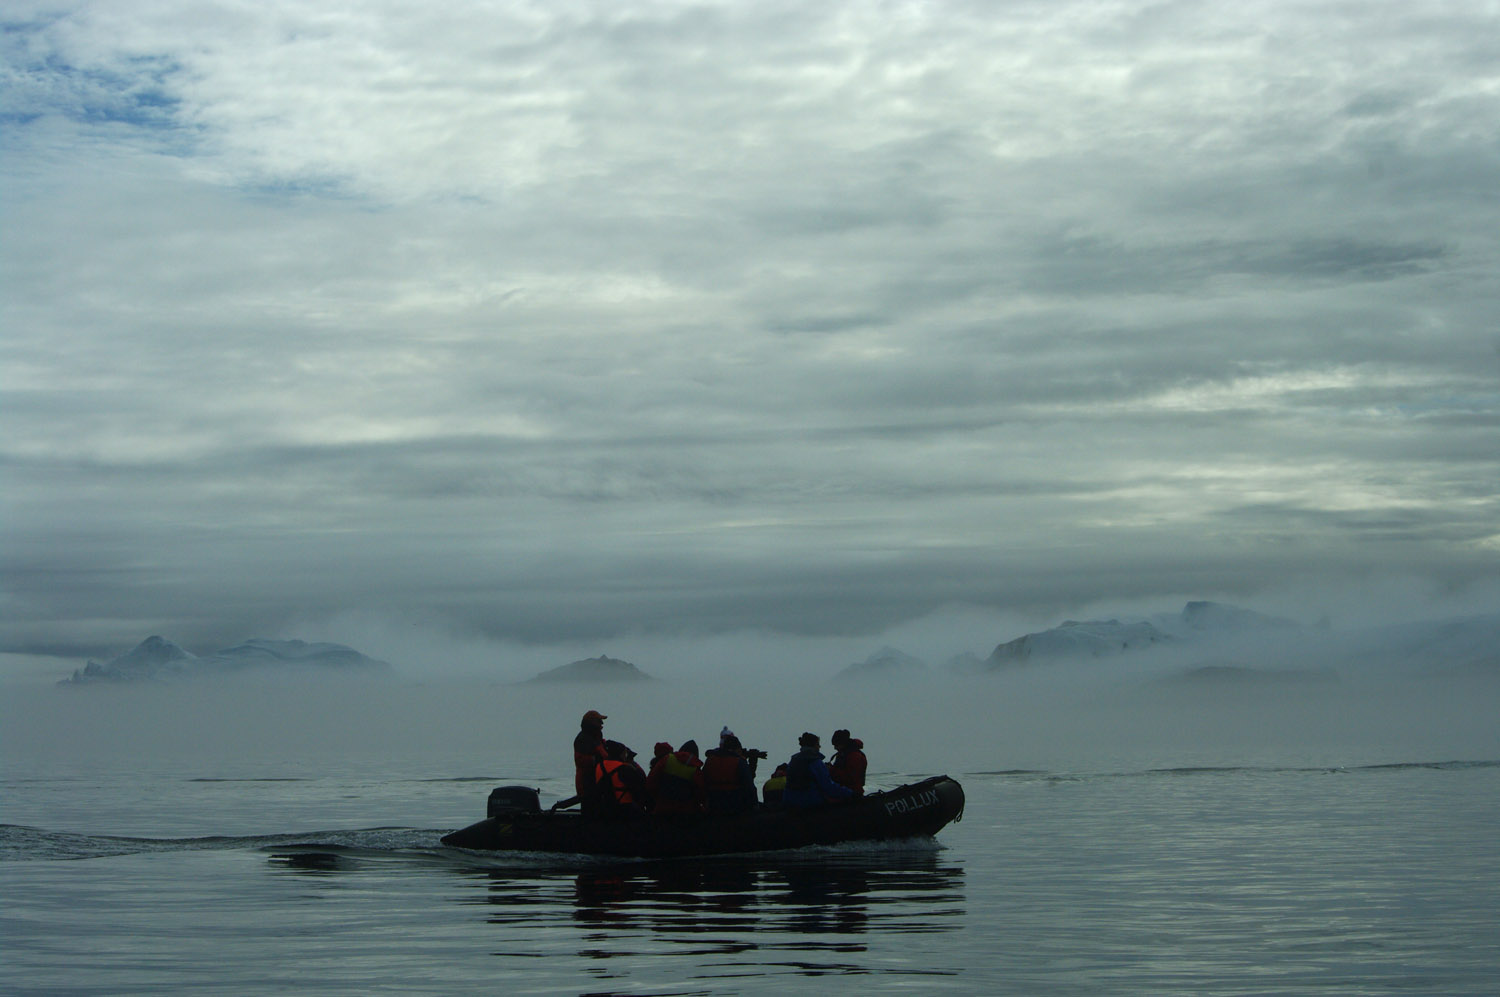 Disko Bay, Ilulissat Greenland, Icebergs in the Mist, Zodiac Cruise